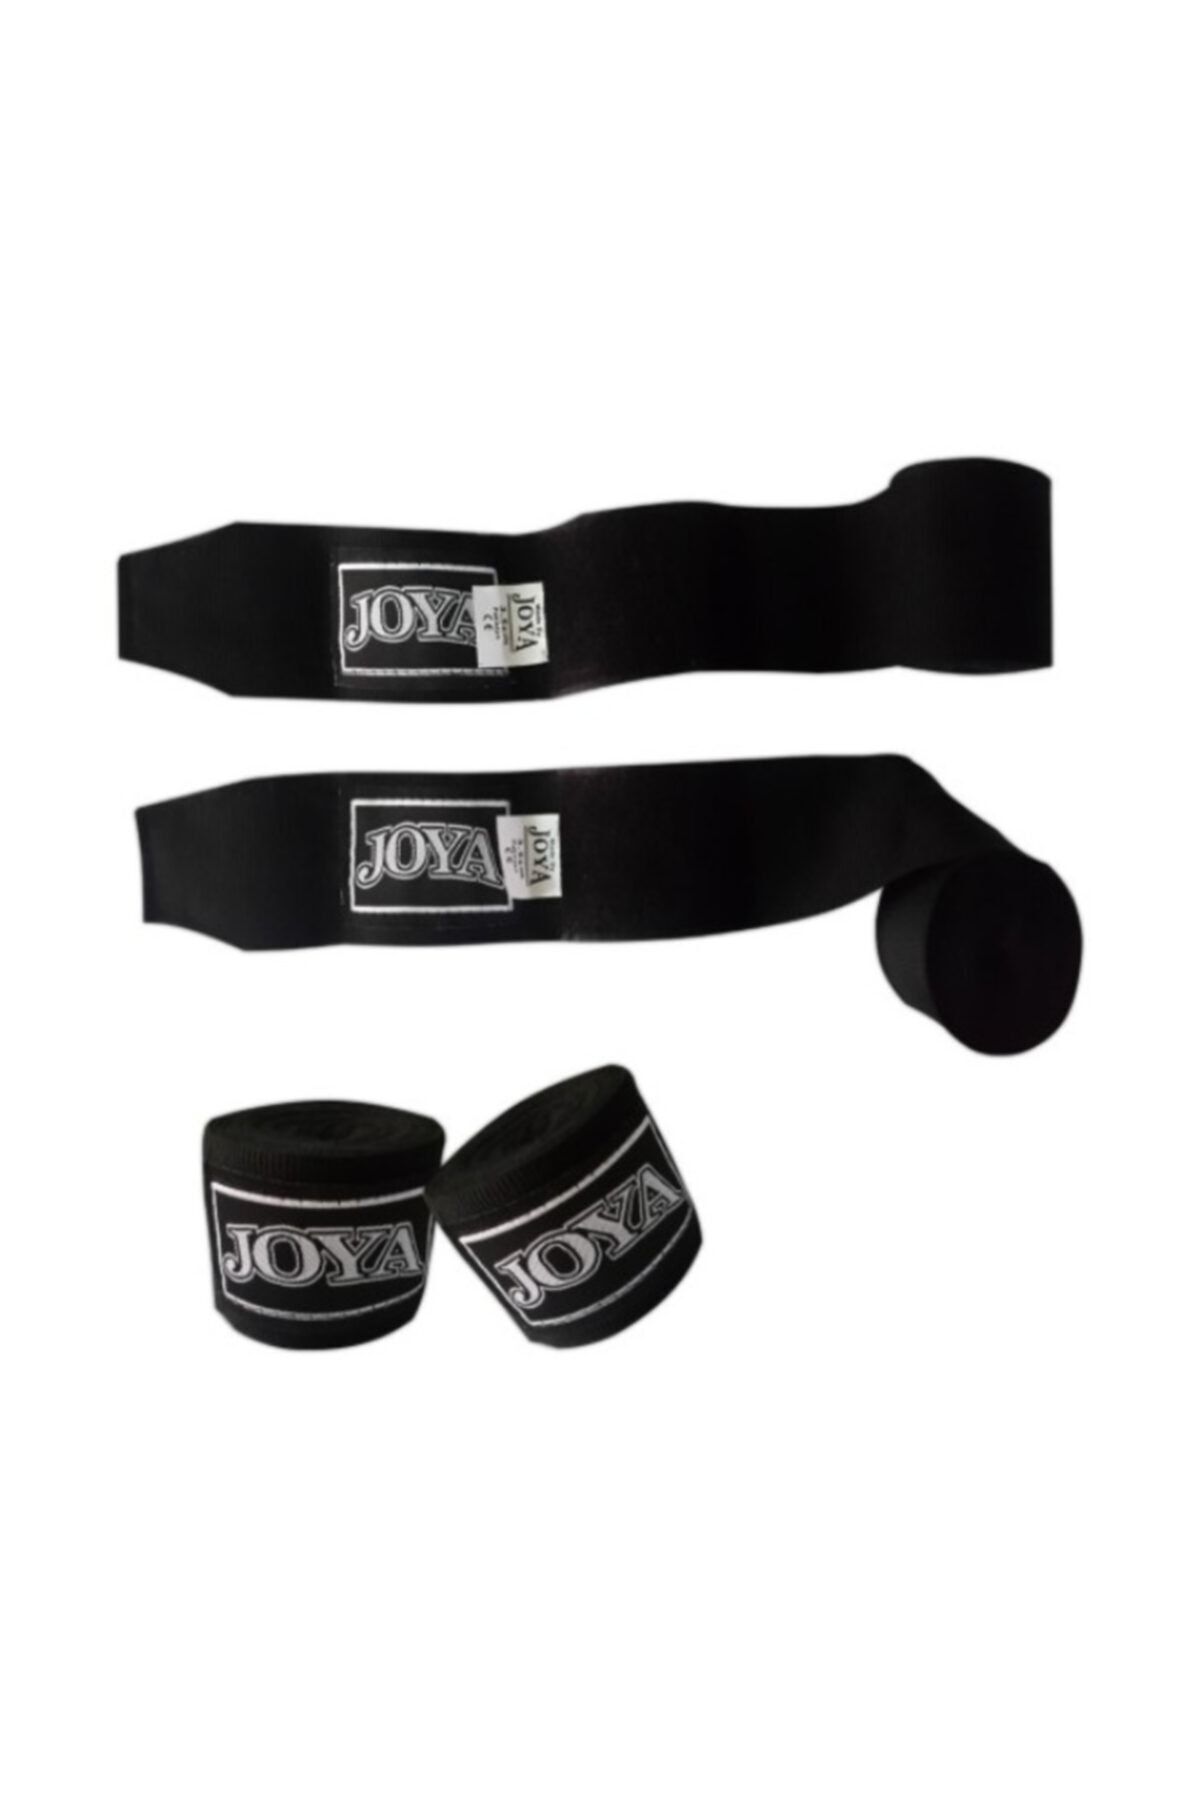 Joya Handwraps Velcro Cotton Boxıng (048000 Black)